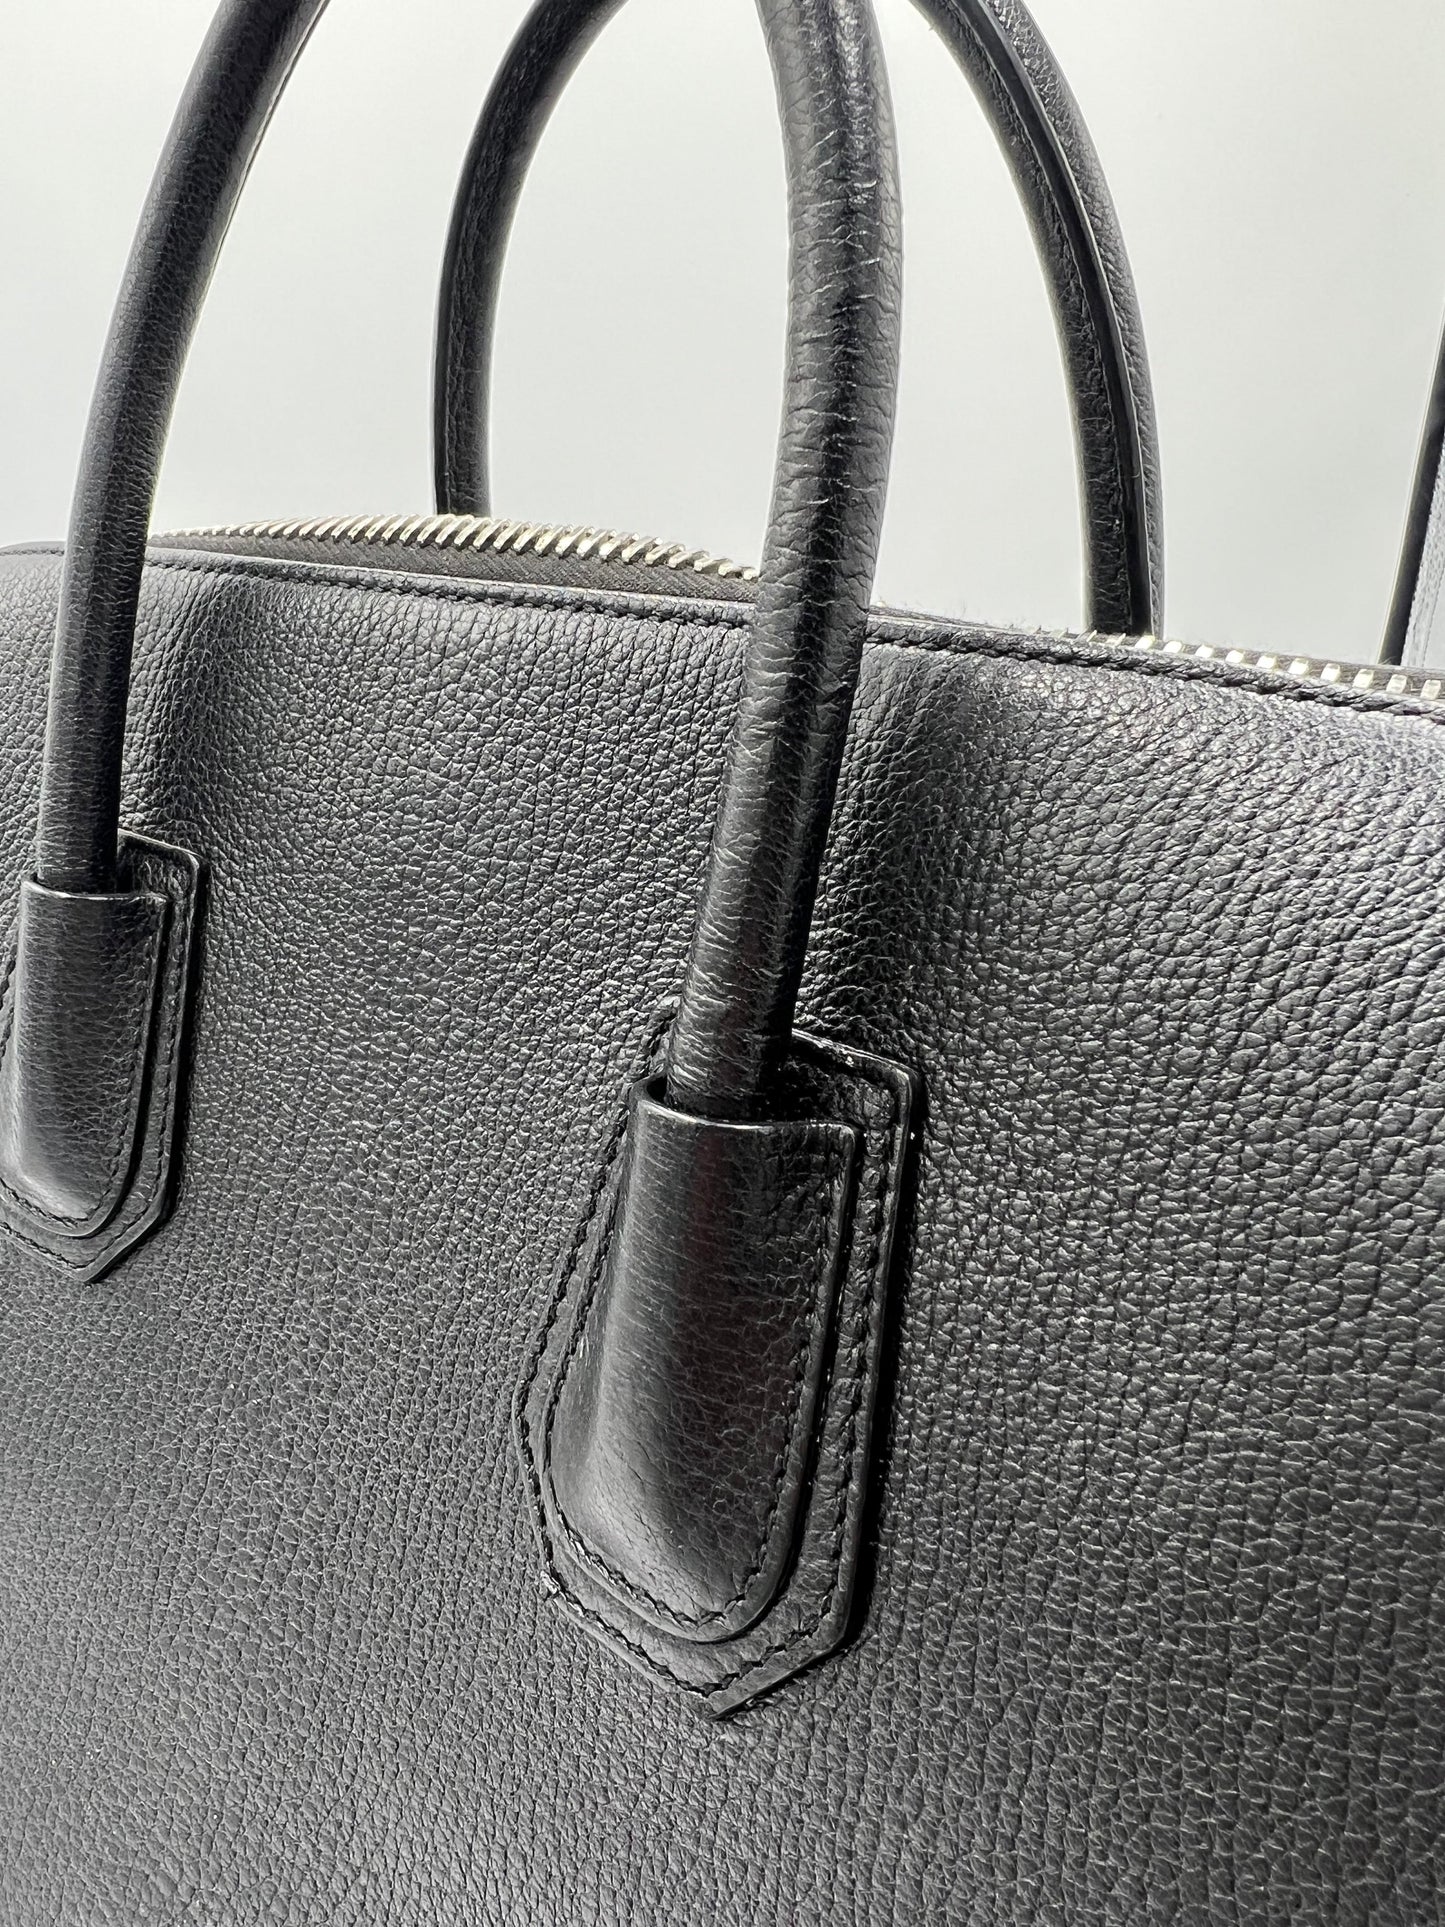 Givenchy Medium Antigona Bag in Grained Leather